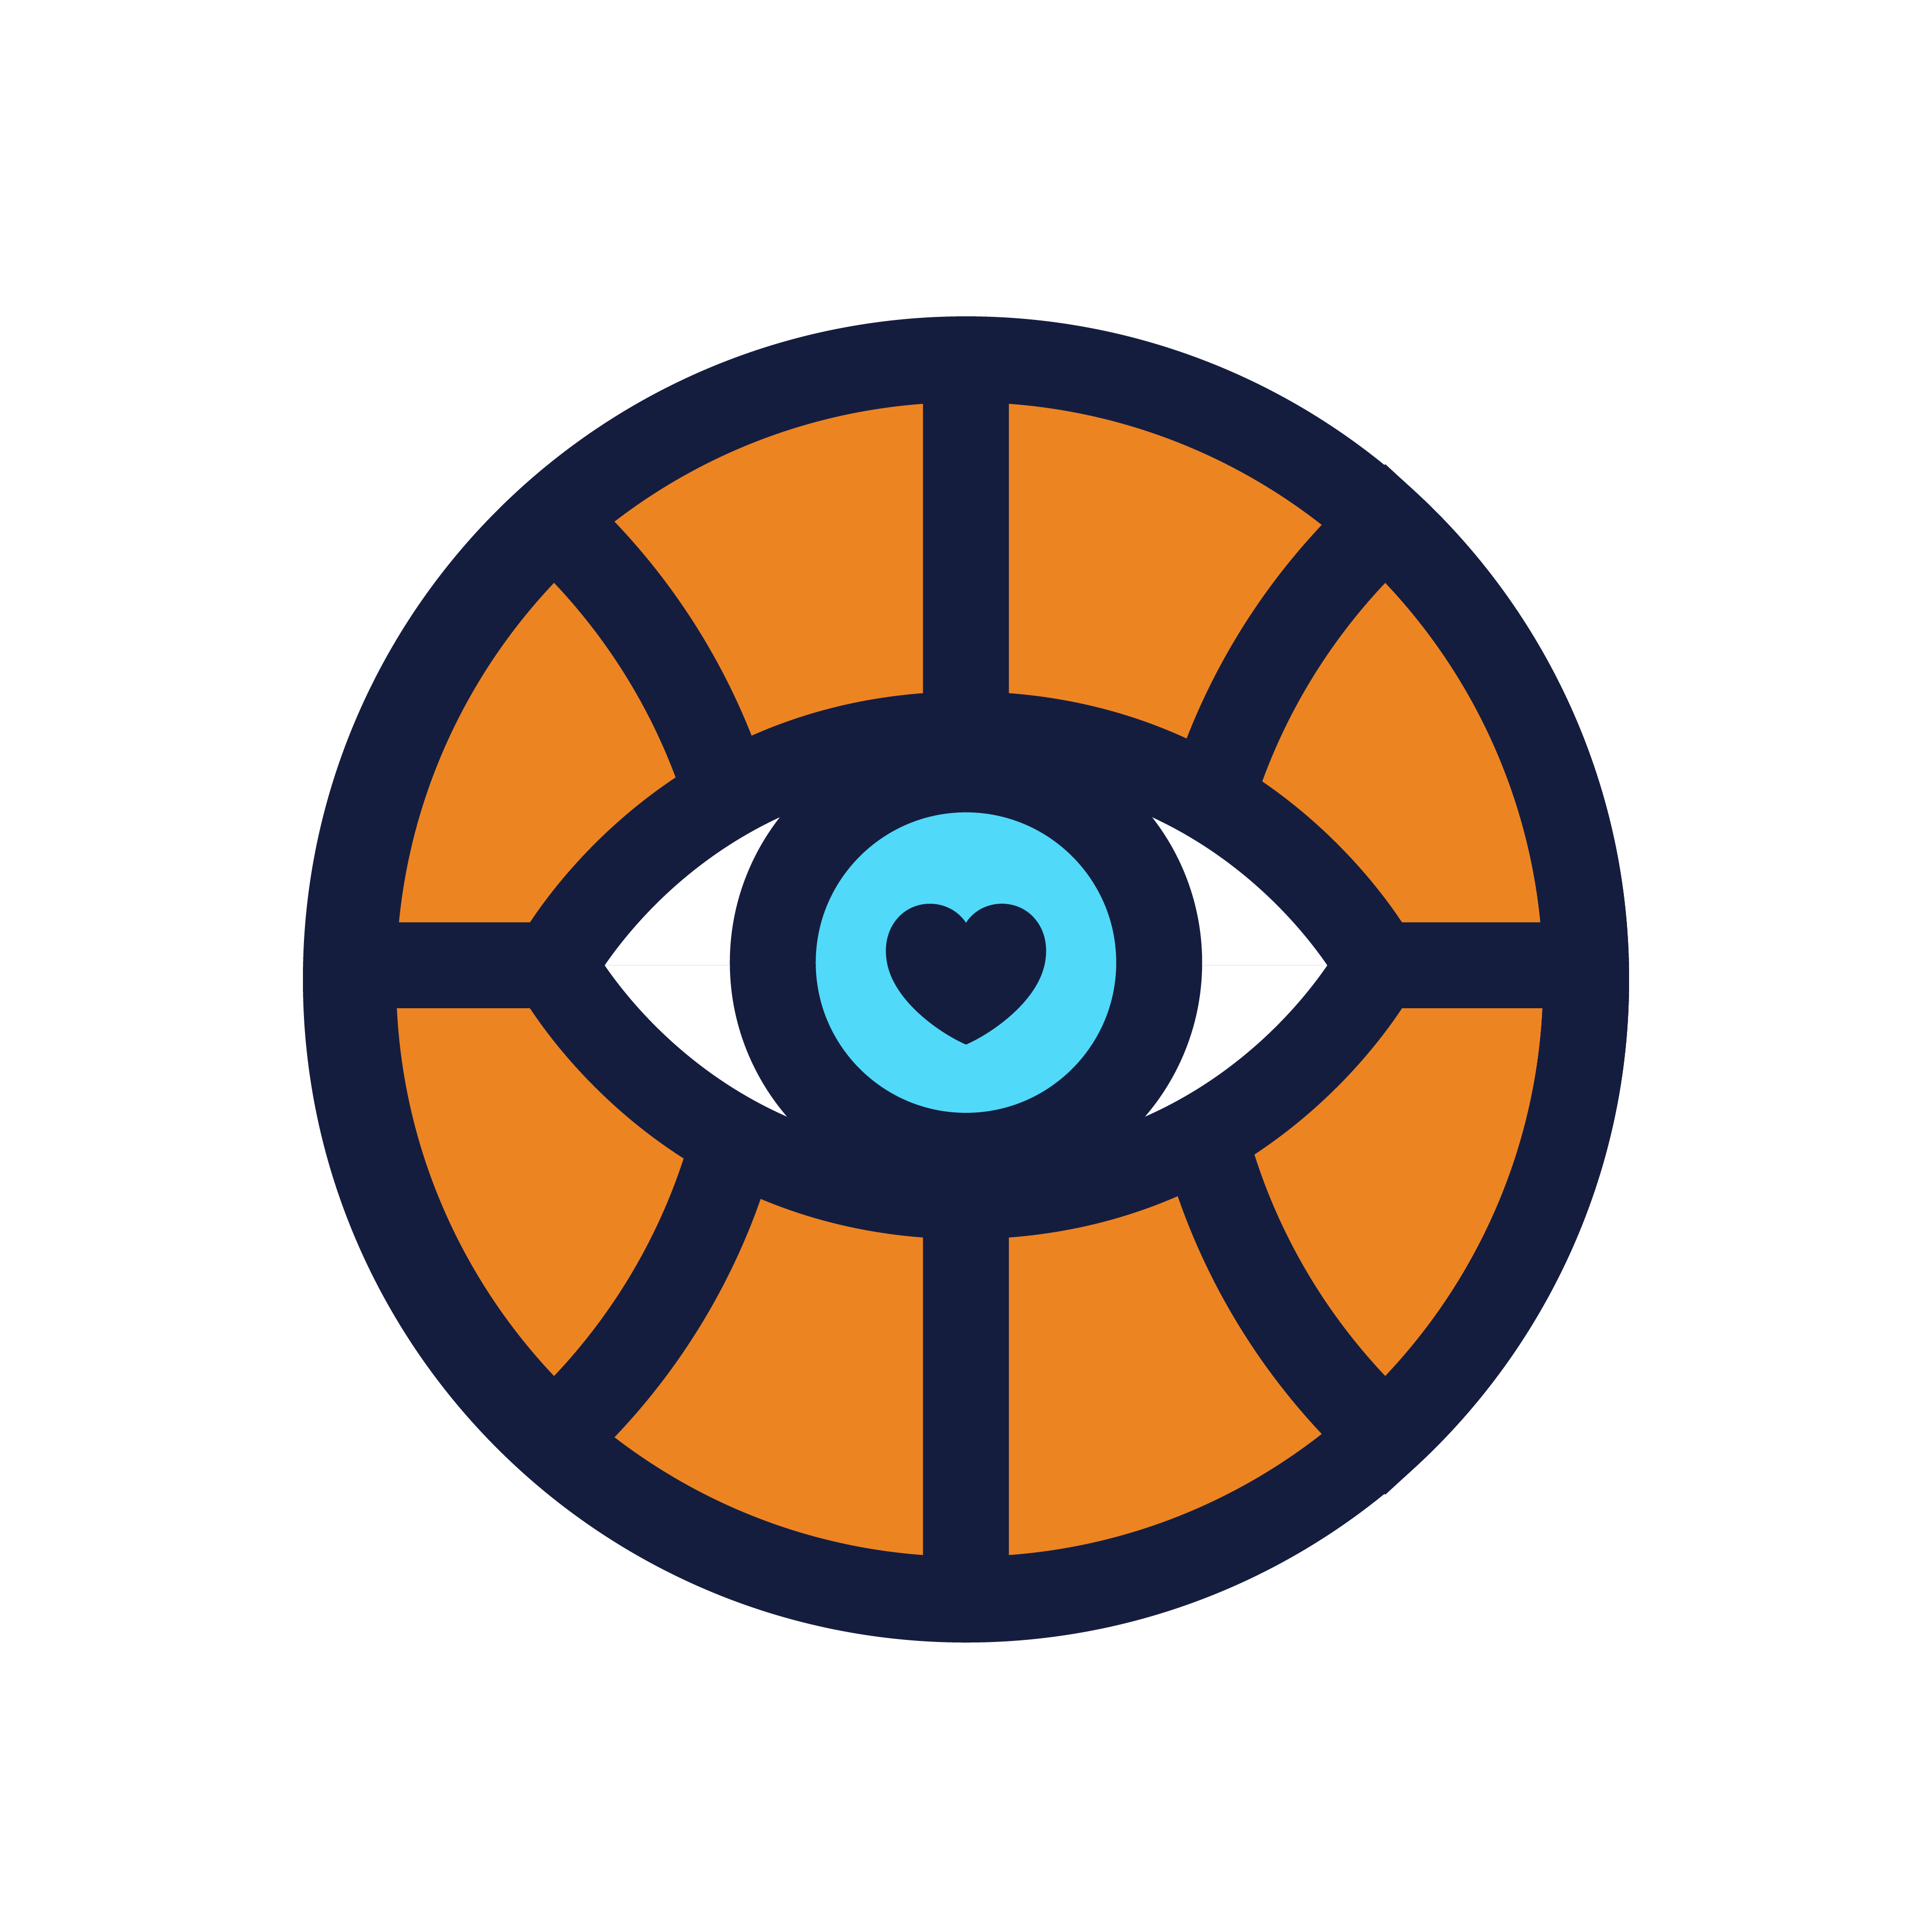 Eye Love Basketball logo design by logo designer Pod Design Shop for your inspiration and for the worlds largest logo competition